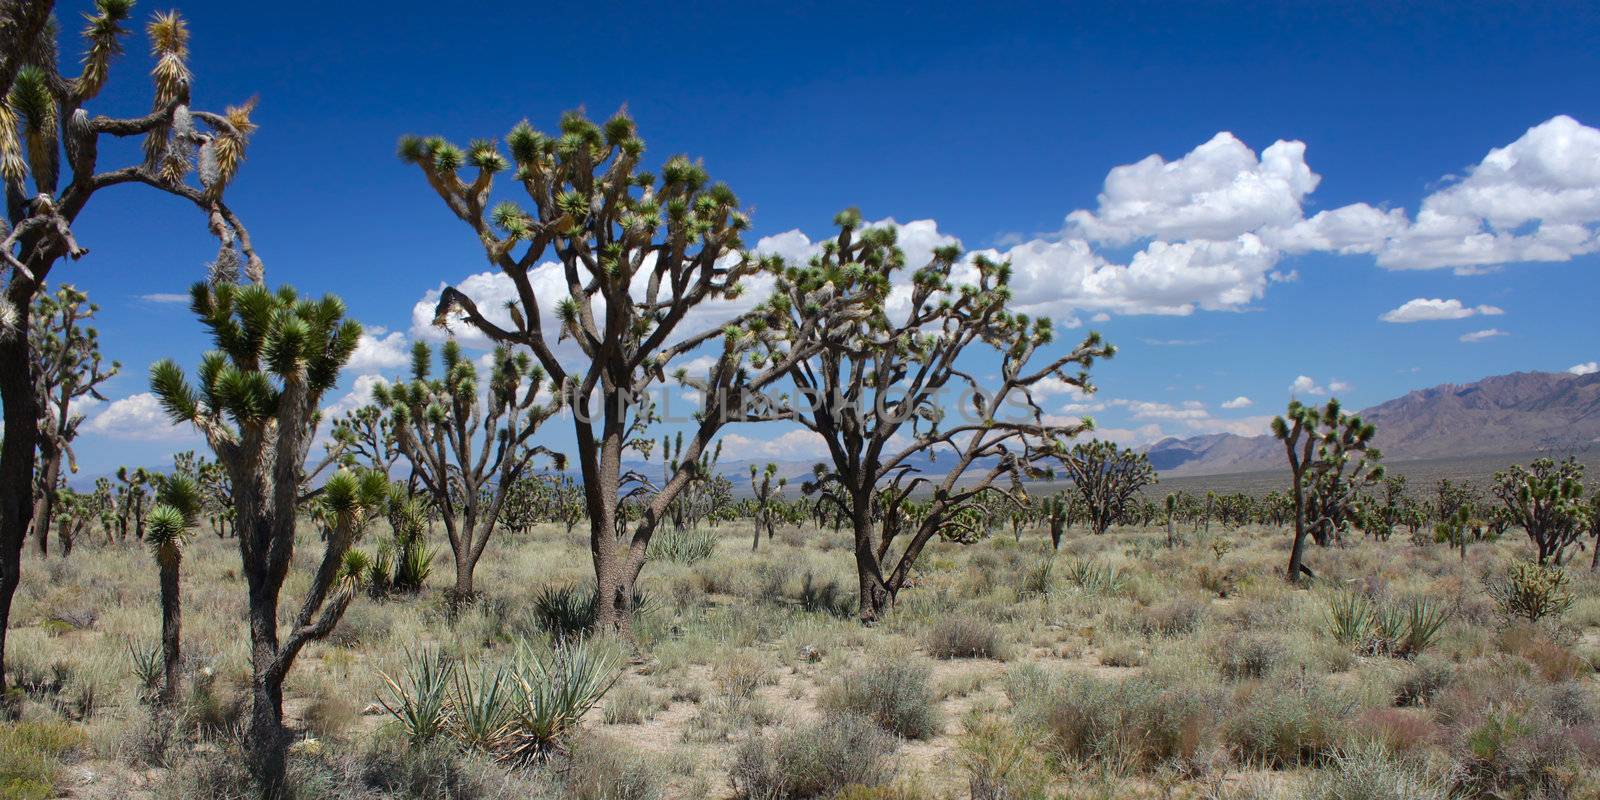 Joshua trees at the Mojave National Preserve in California.